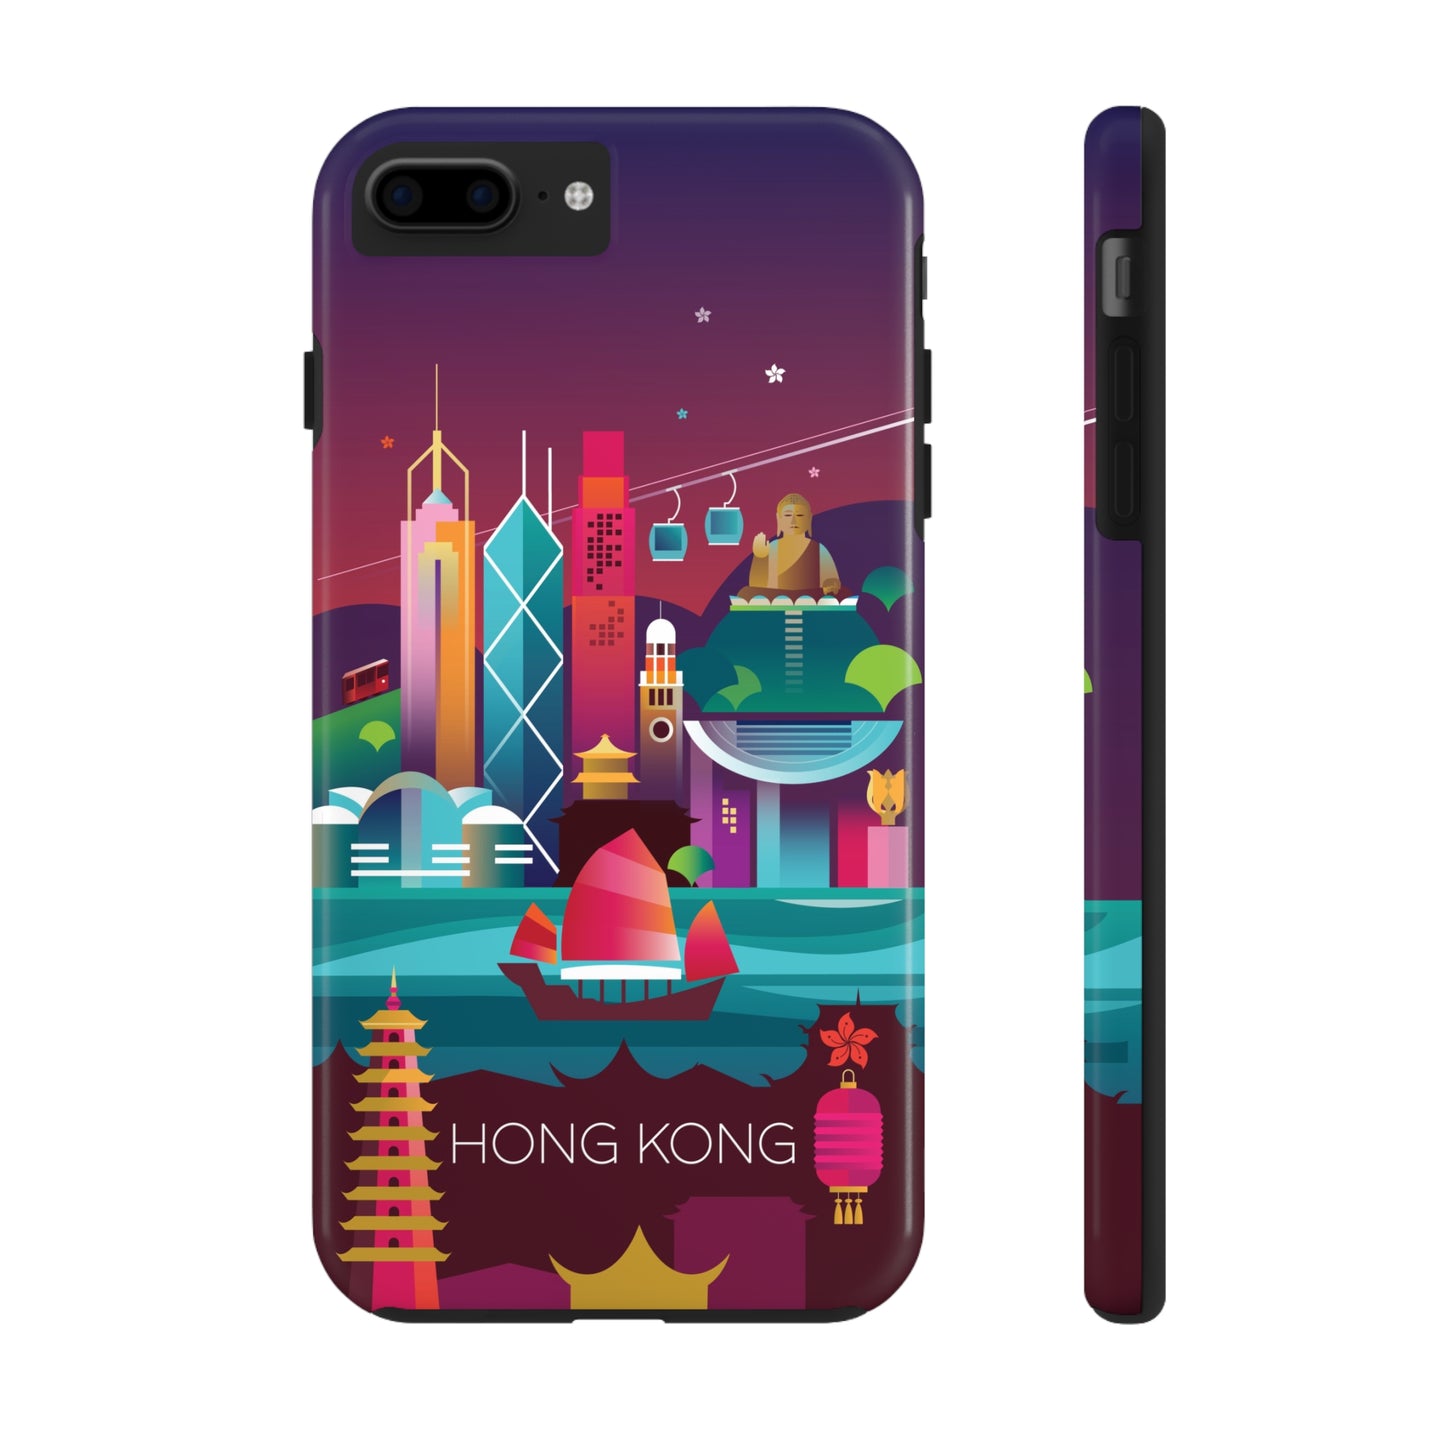 Hong Kong Phone Case